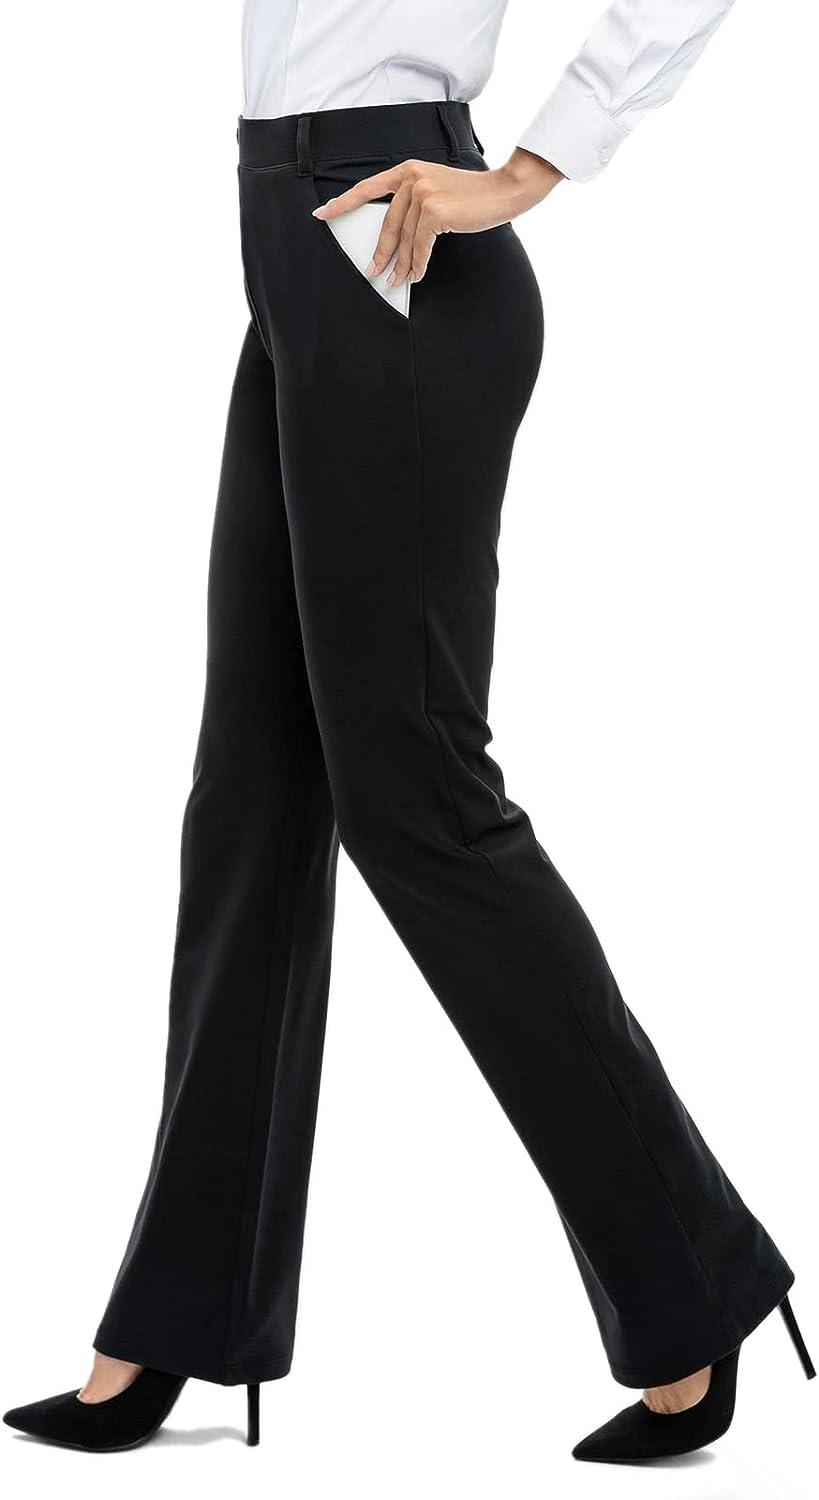 Women's Yoga Dress Pants with 4 Pockets, 29/31/33/35 Black